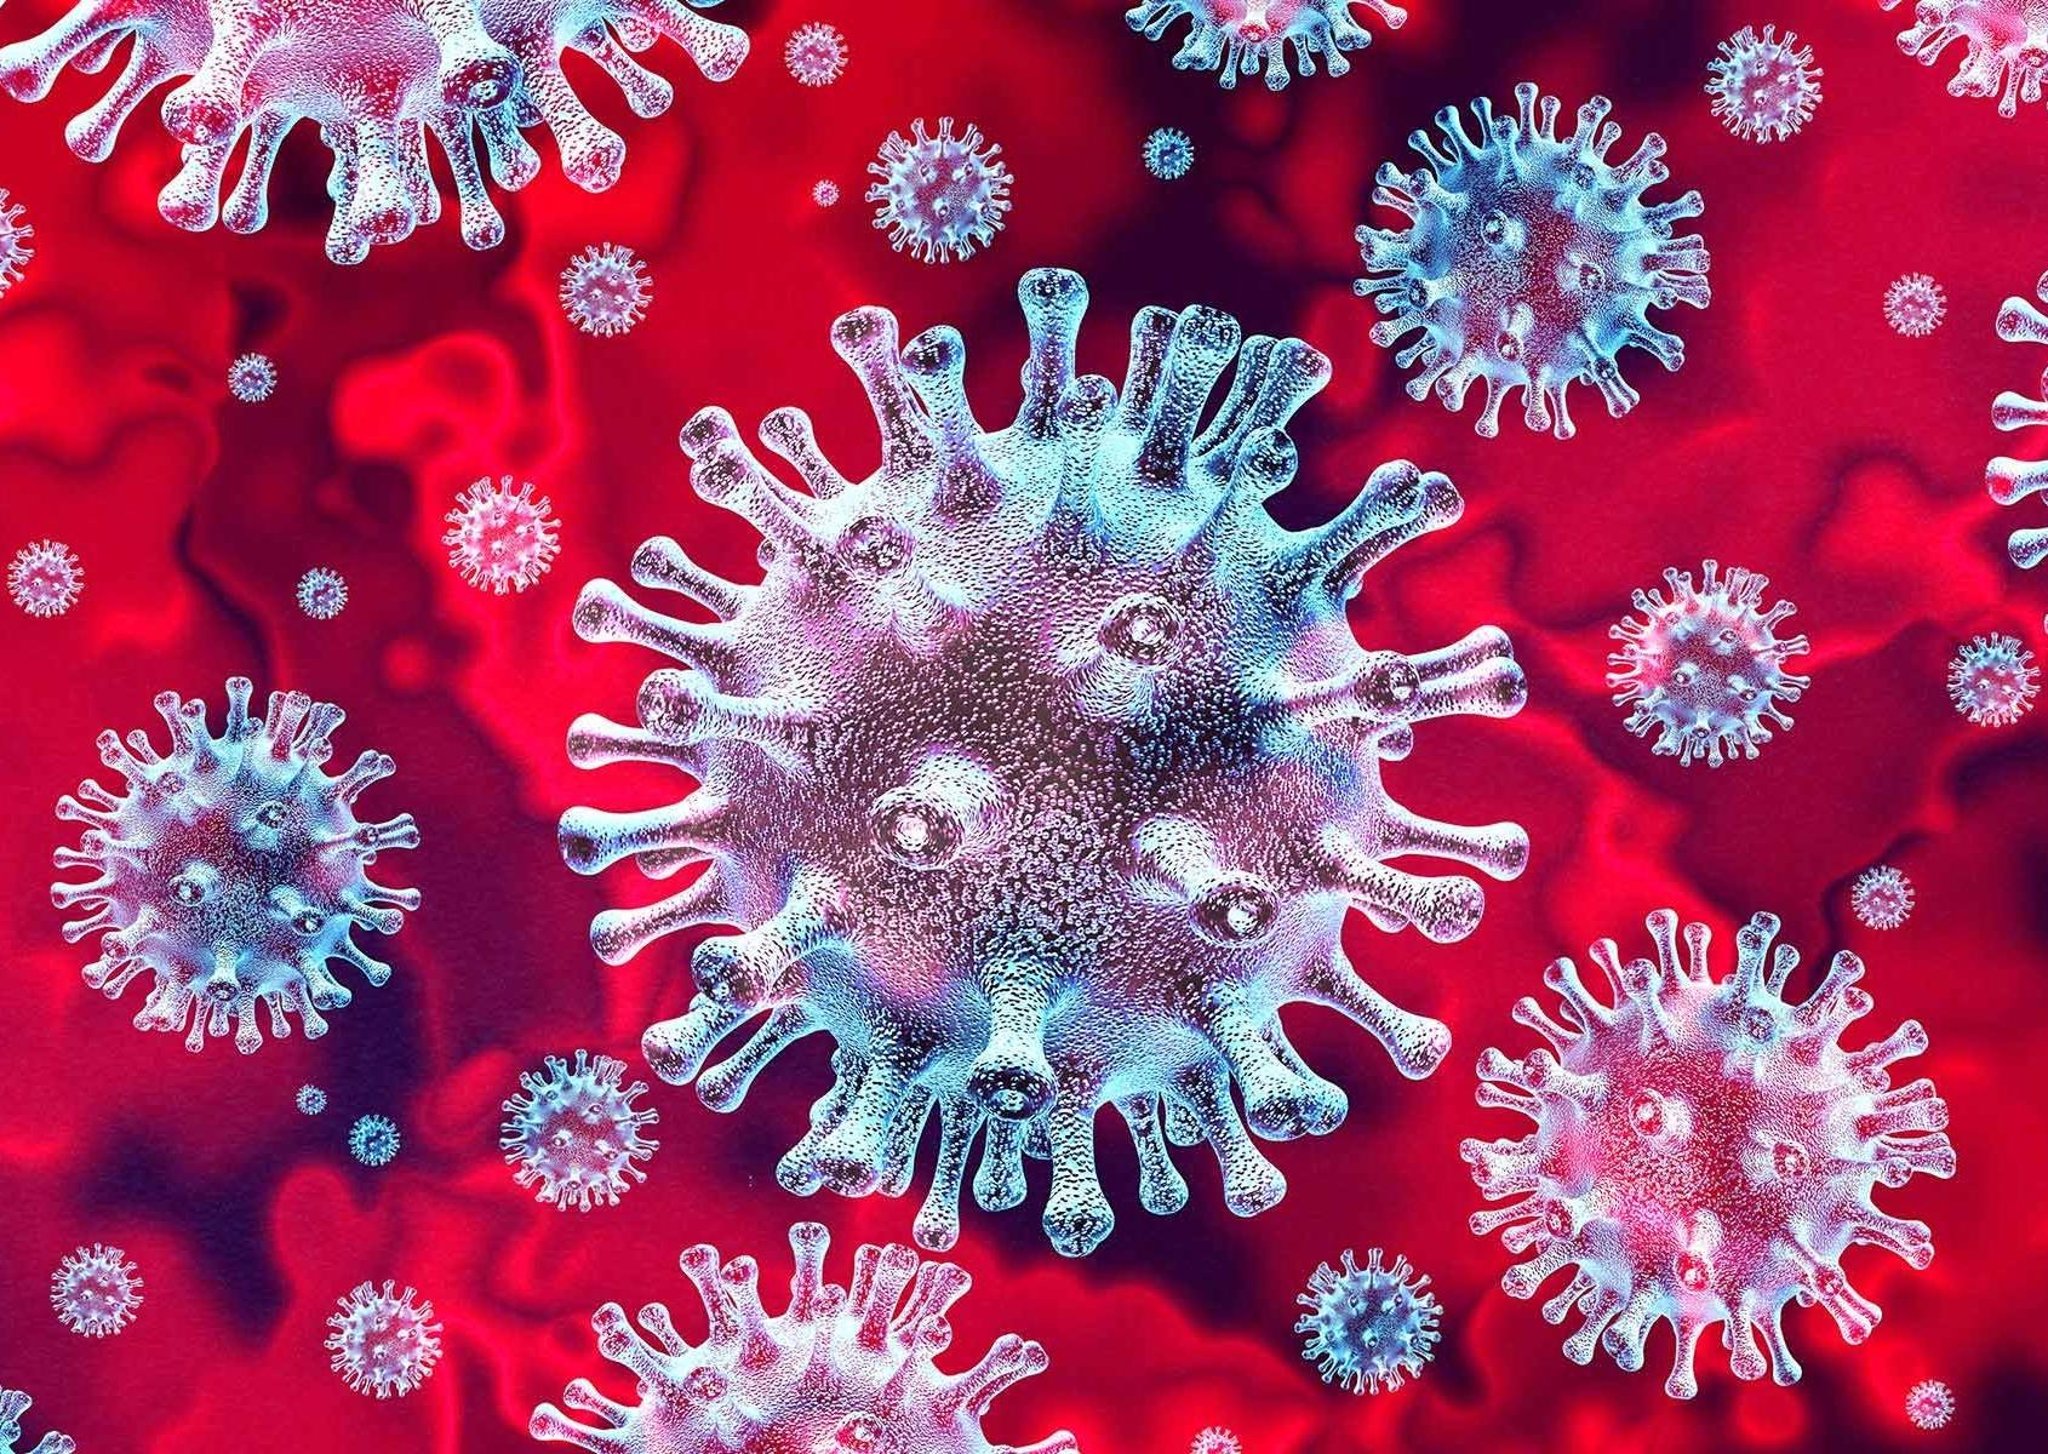 How to Test for The Coronavirus